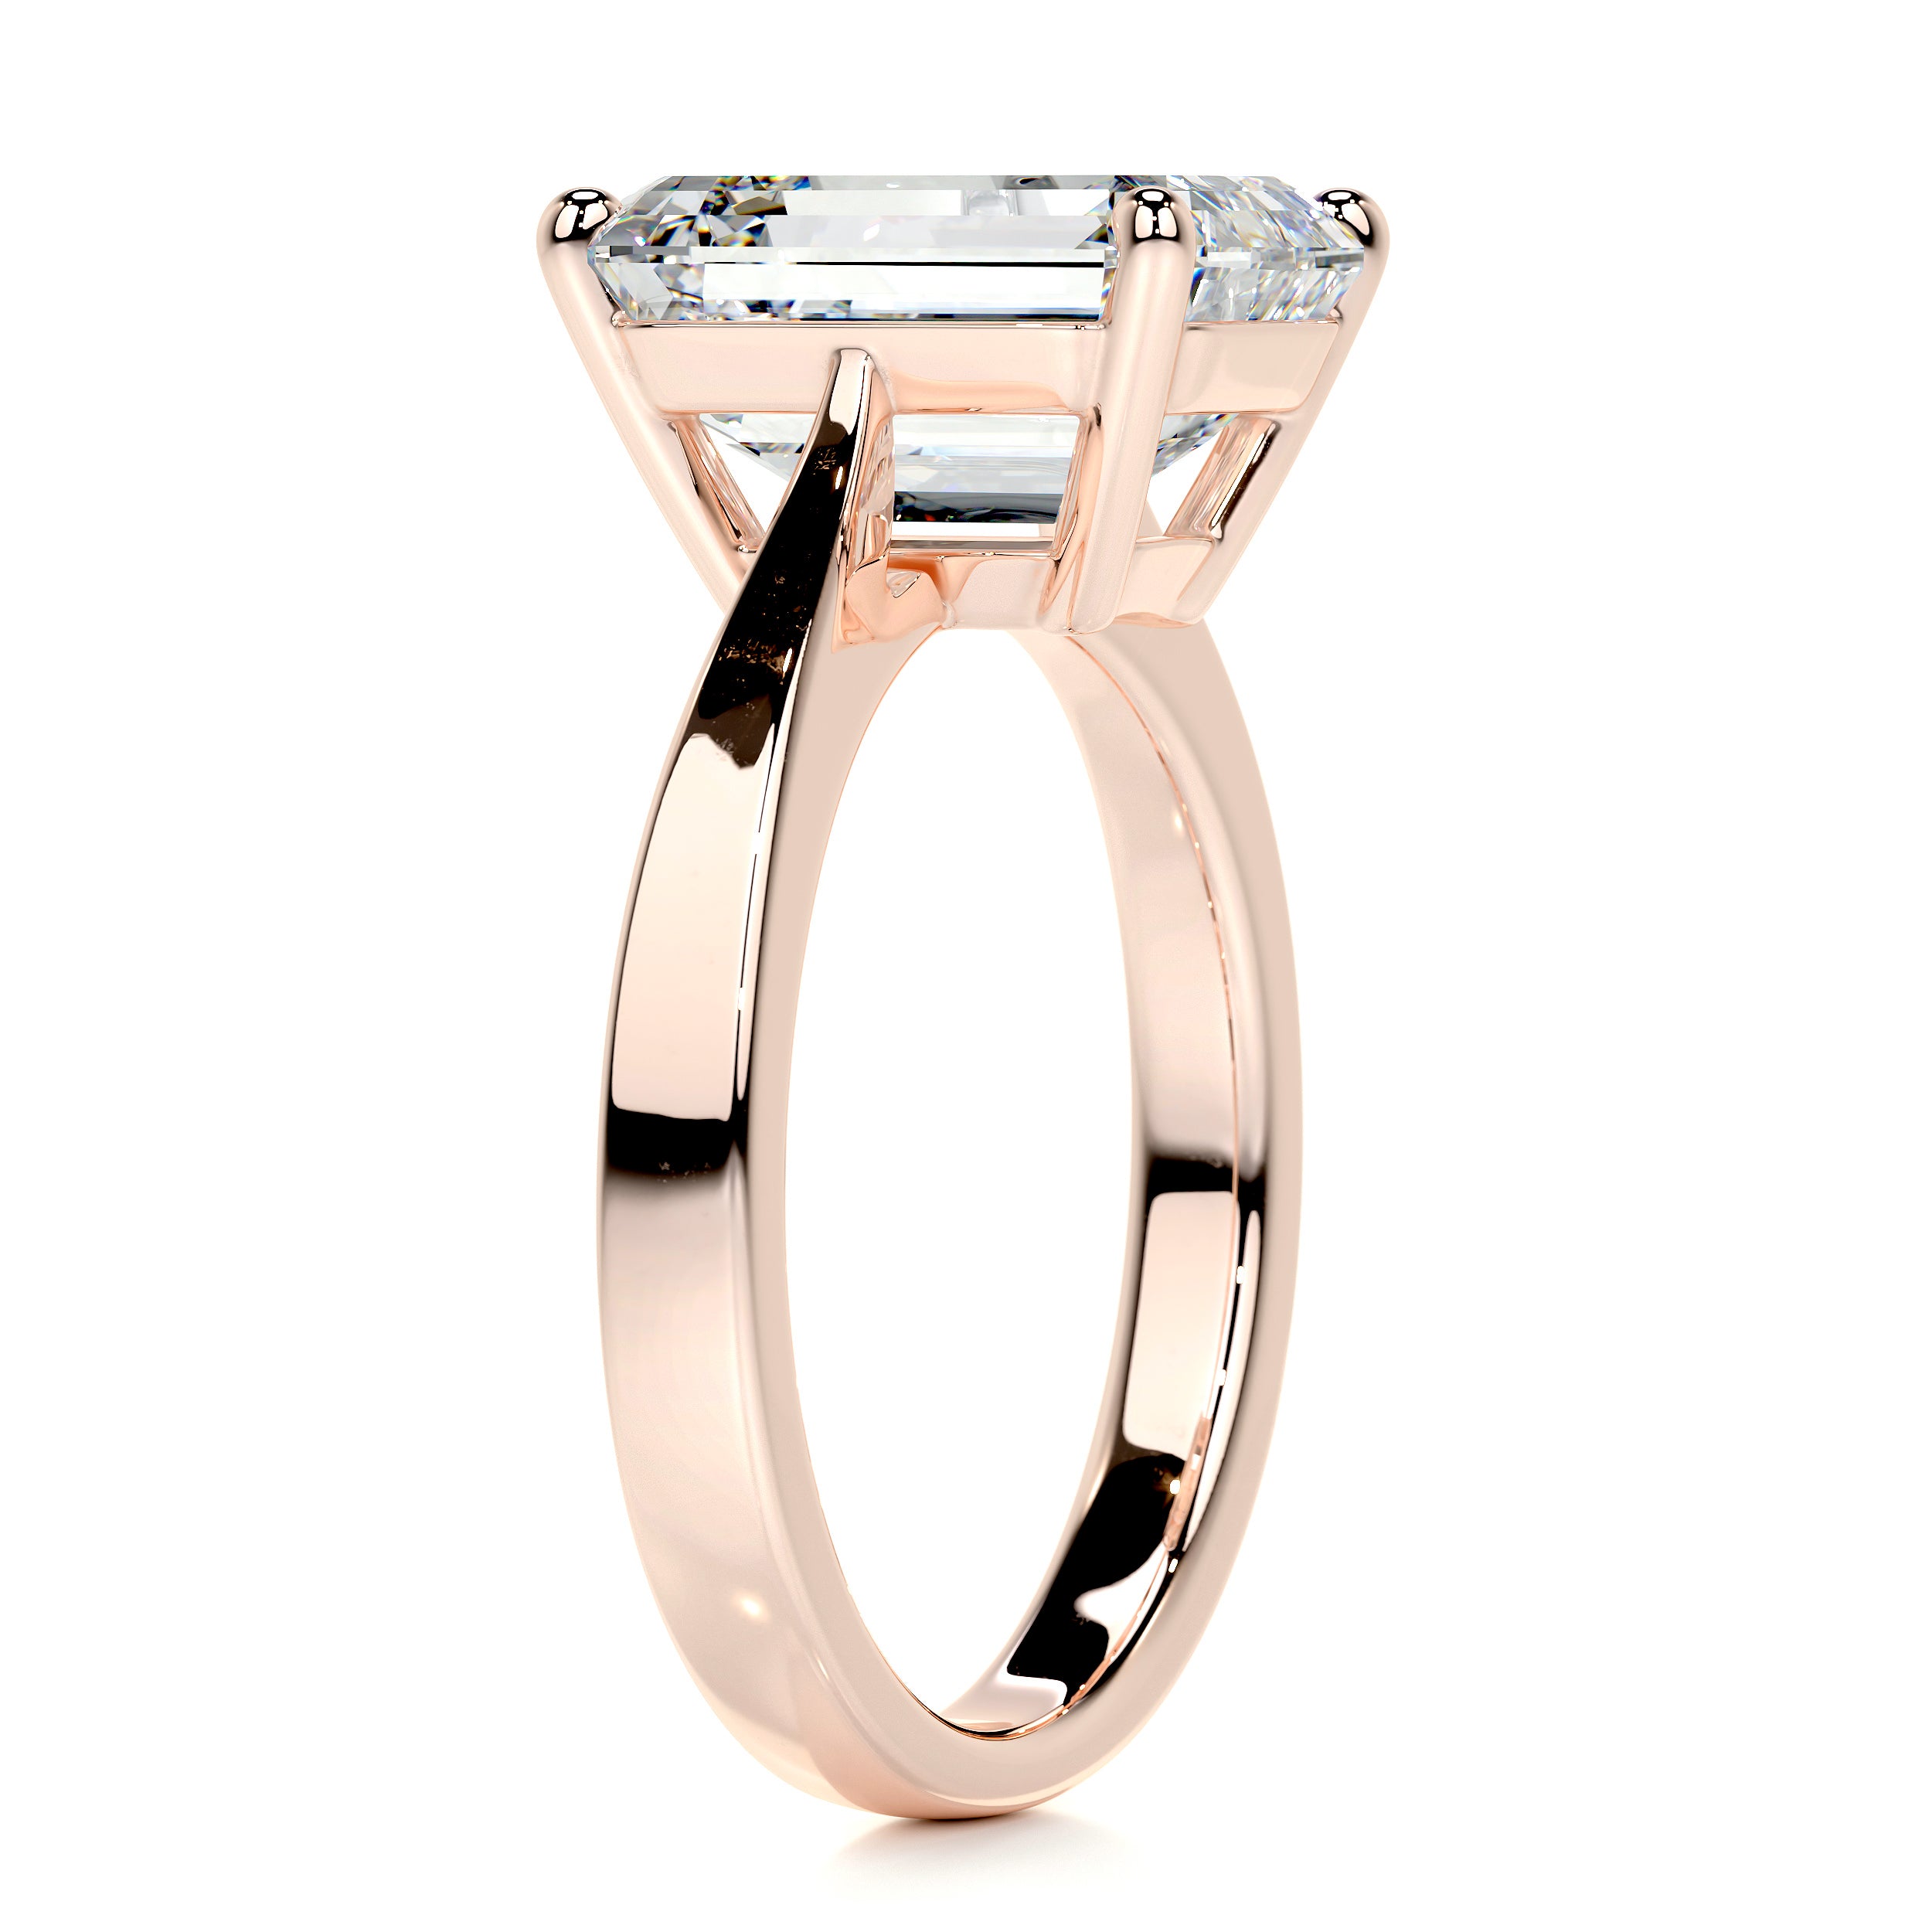 Mariana Diamond Engagement Ring -14K Rose Gold